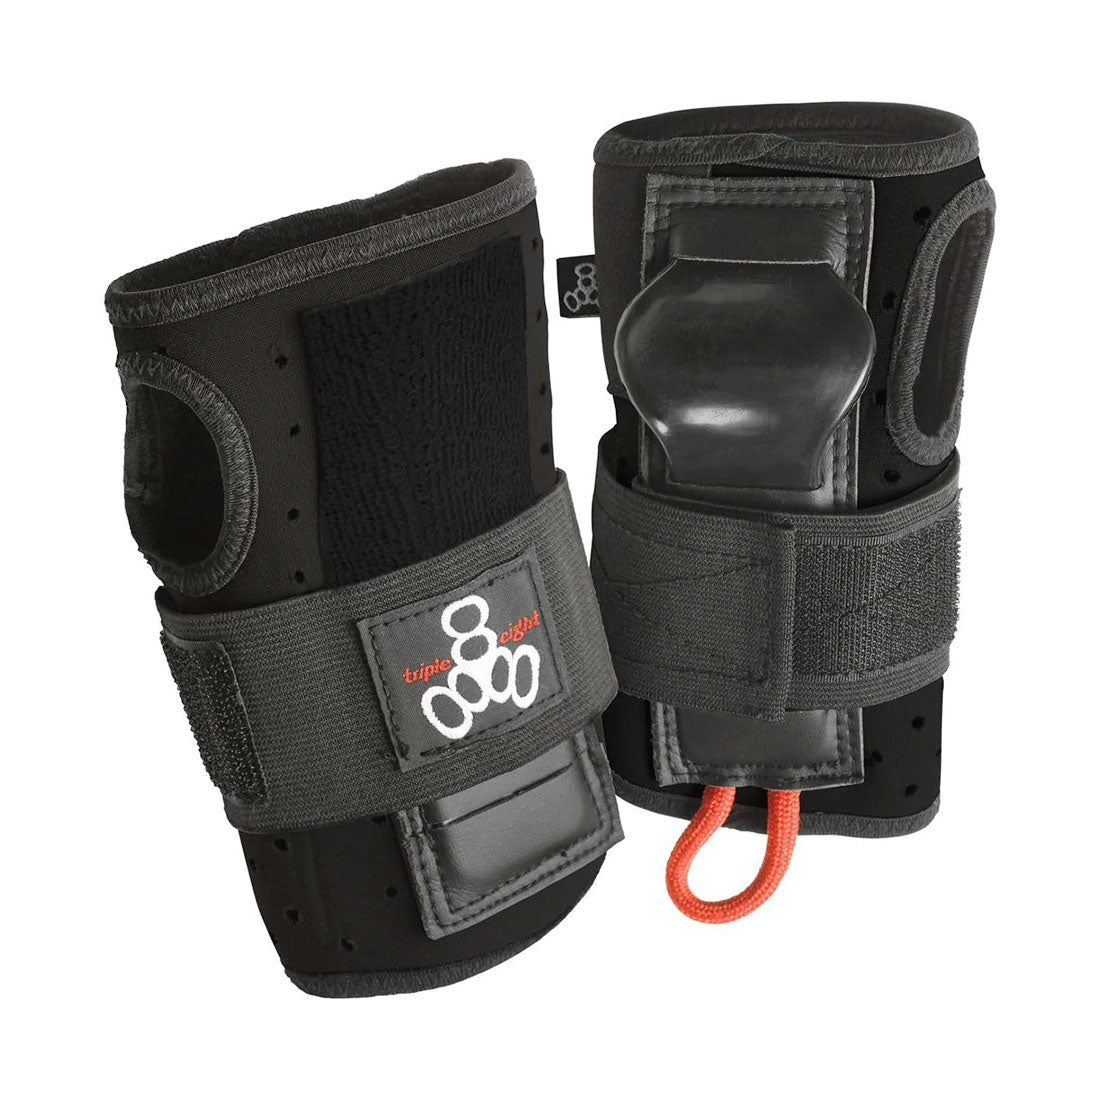 Triple 8 RD Wrist Guards Protective Gear